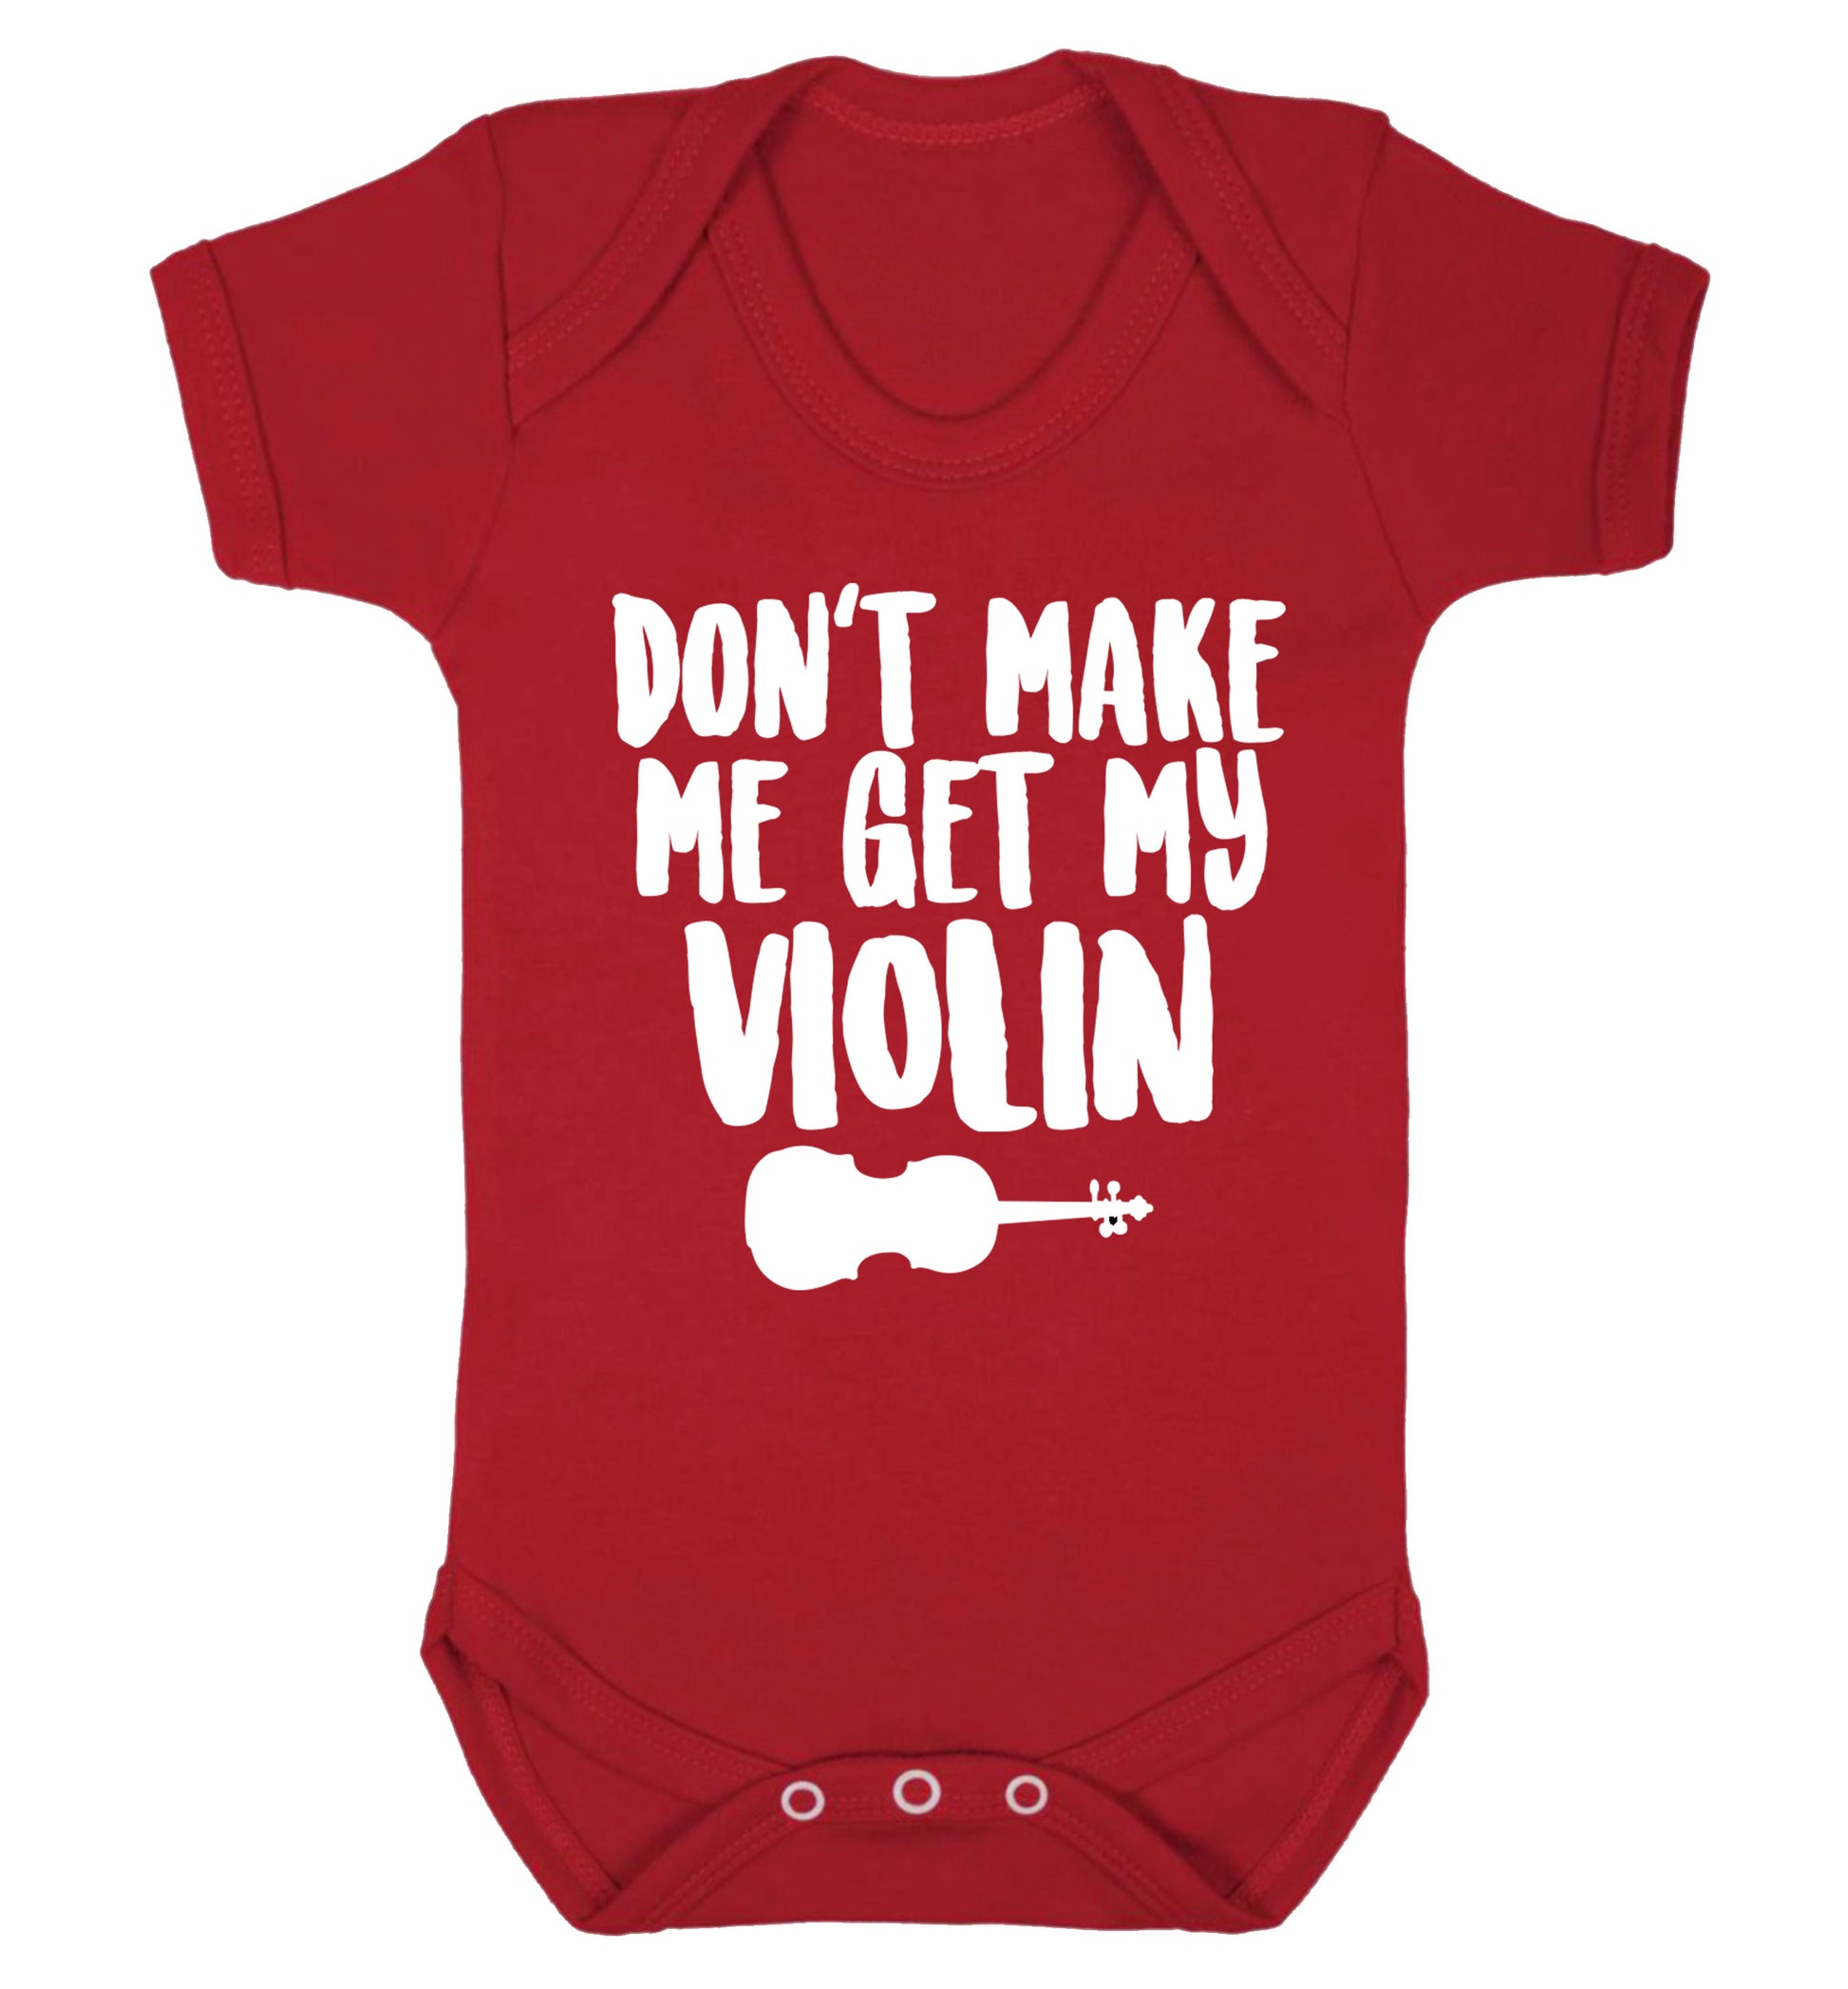 Don't make me get my violin Baby Vest red 18-24 months